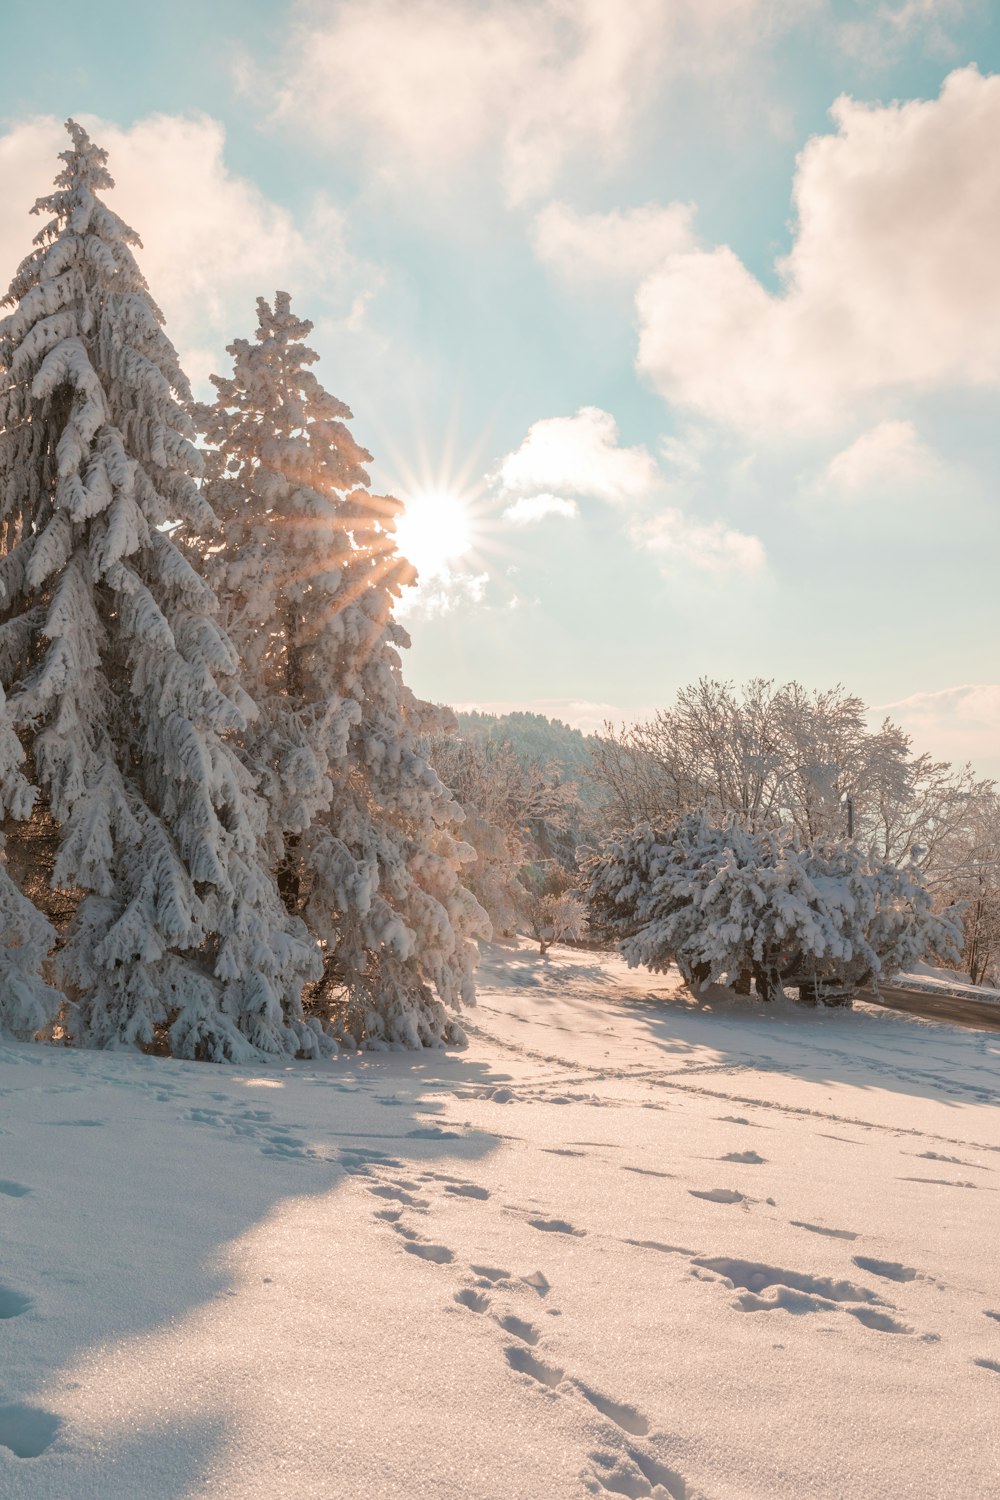 Winter Landscape Pictures Stunning, Winter Landscapes Images